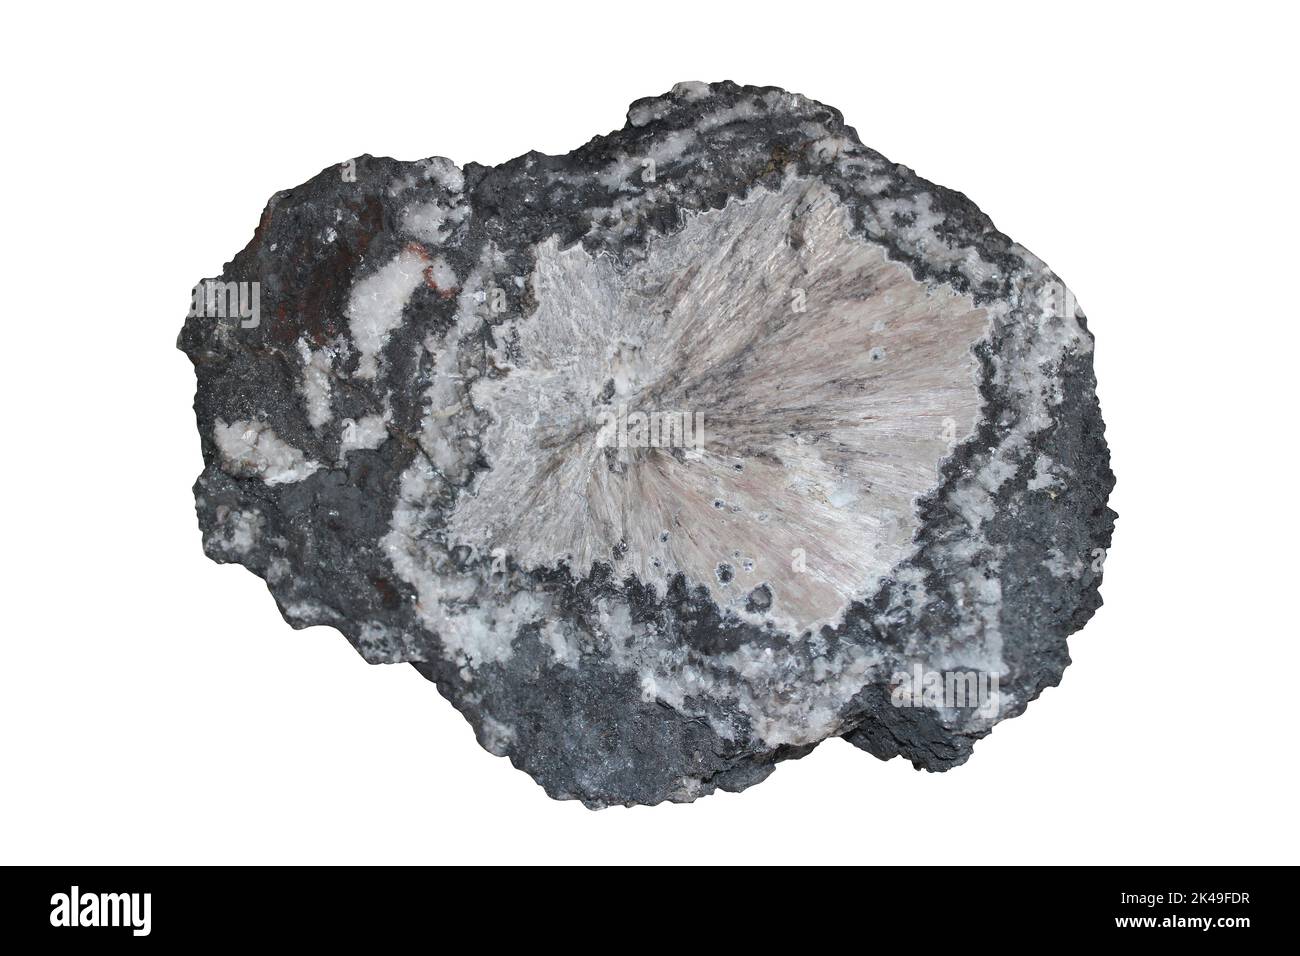 Mendipita Mineral de plomo oxihaluro encontrado en las colinas de Mendip, Somerset, Inglaterra Foto de stock